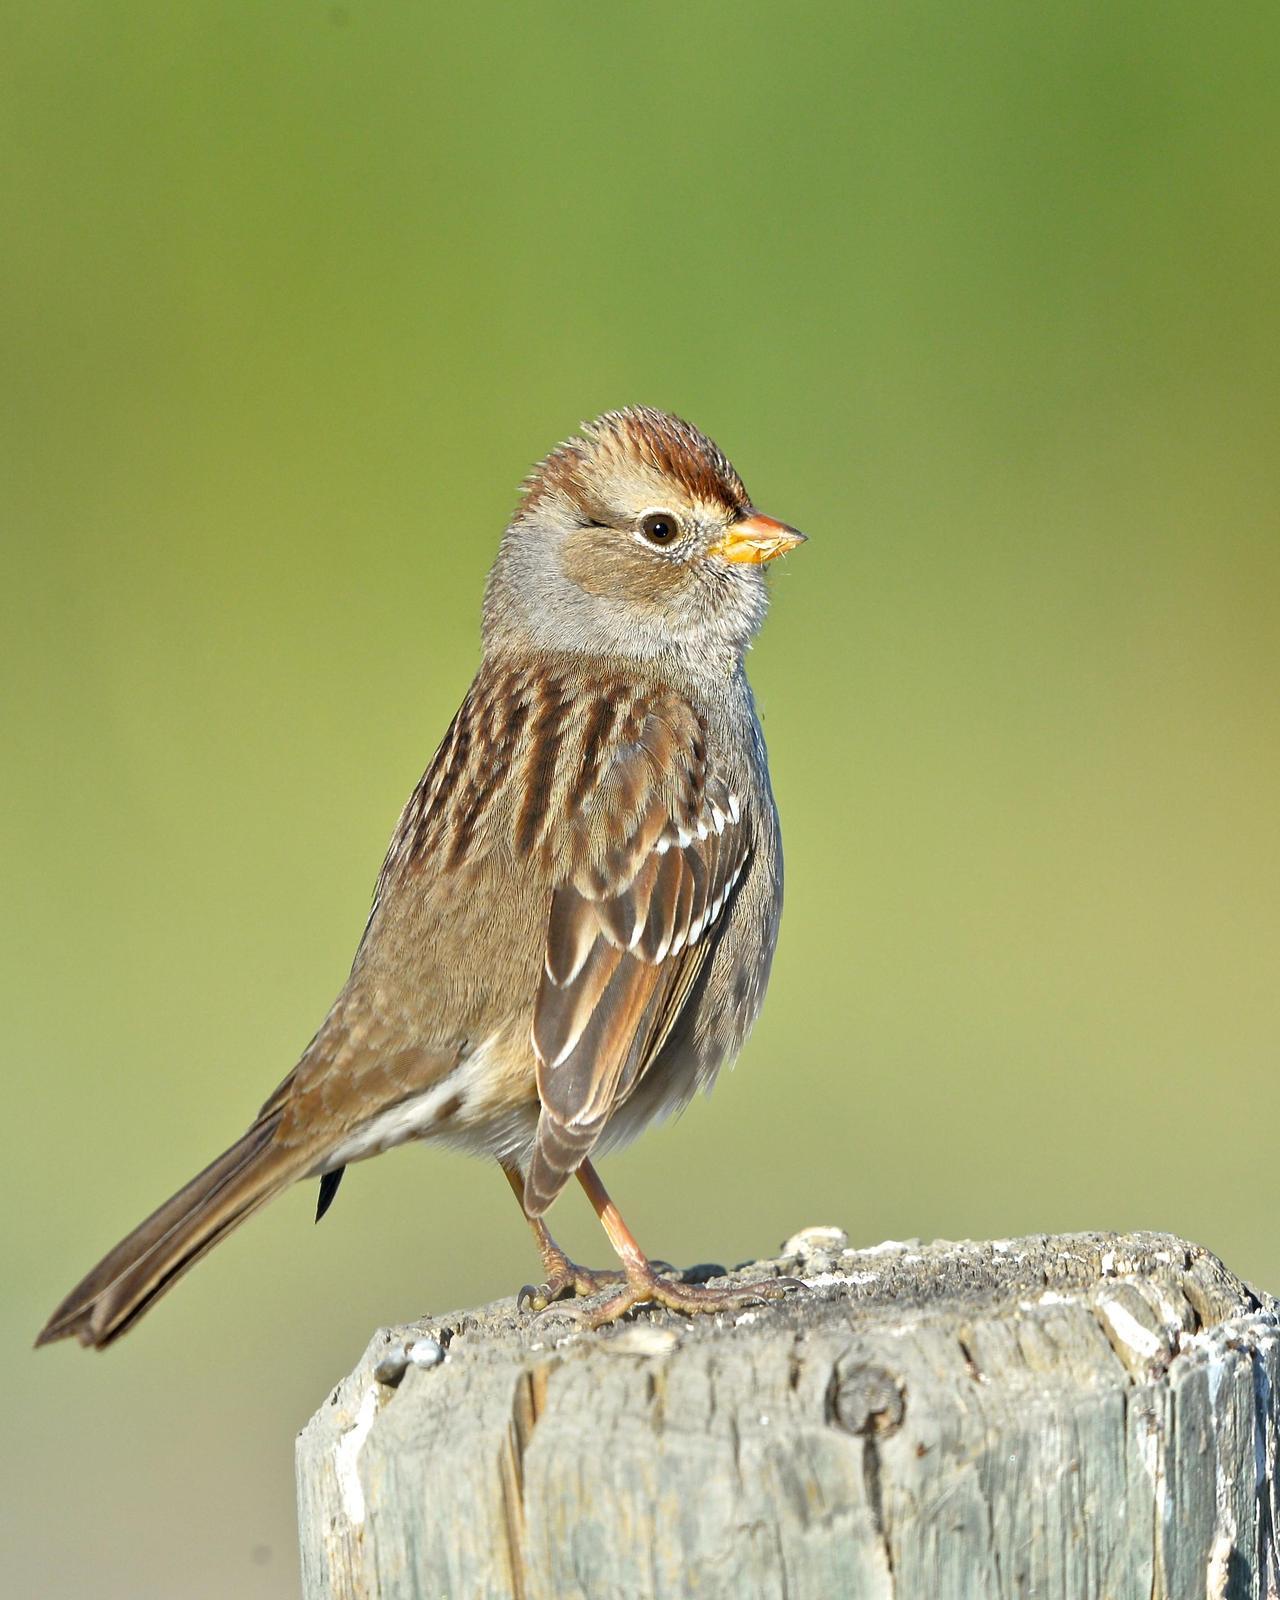 White-crowned Sparrow (nuttalli) Photo by Gerald Friesen